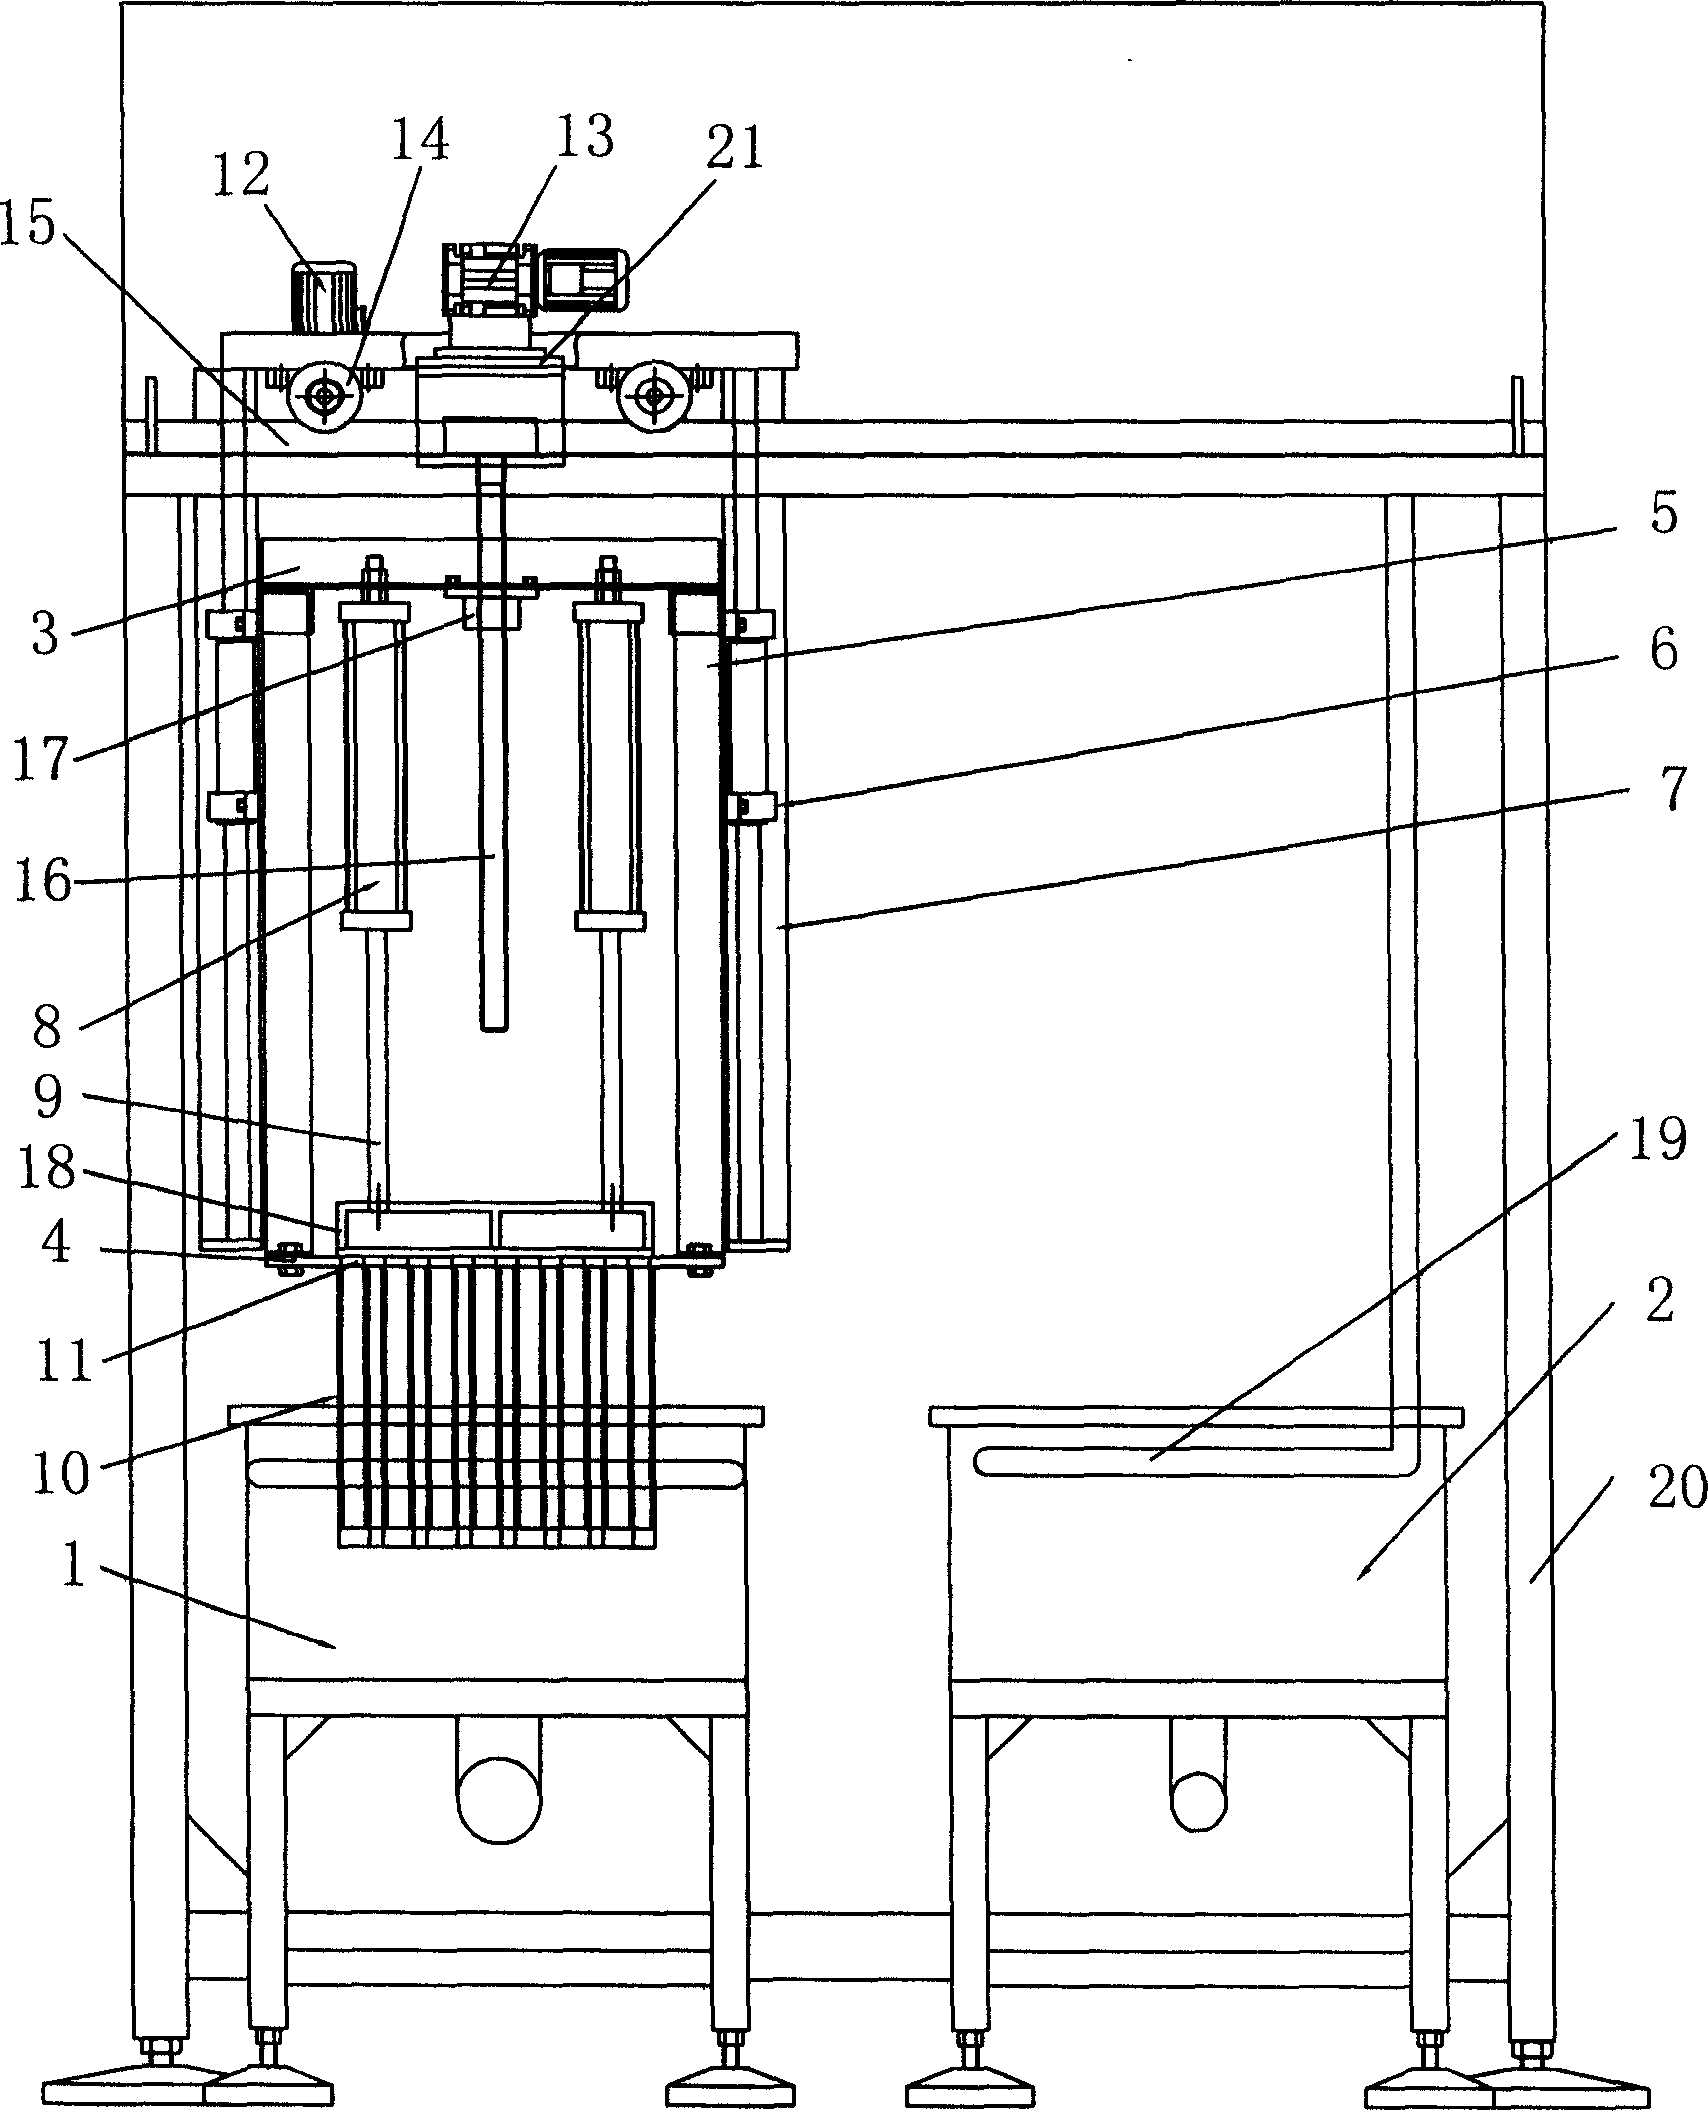 Automatic slurry deferrization machine